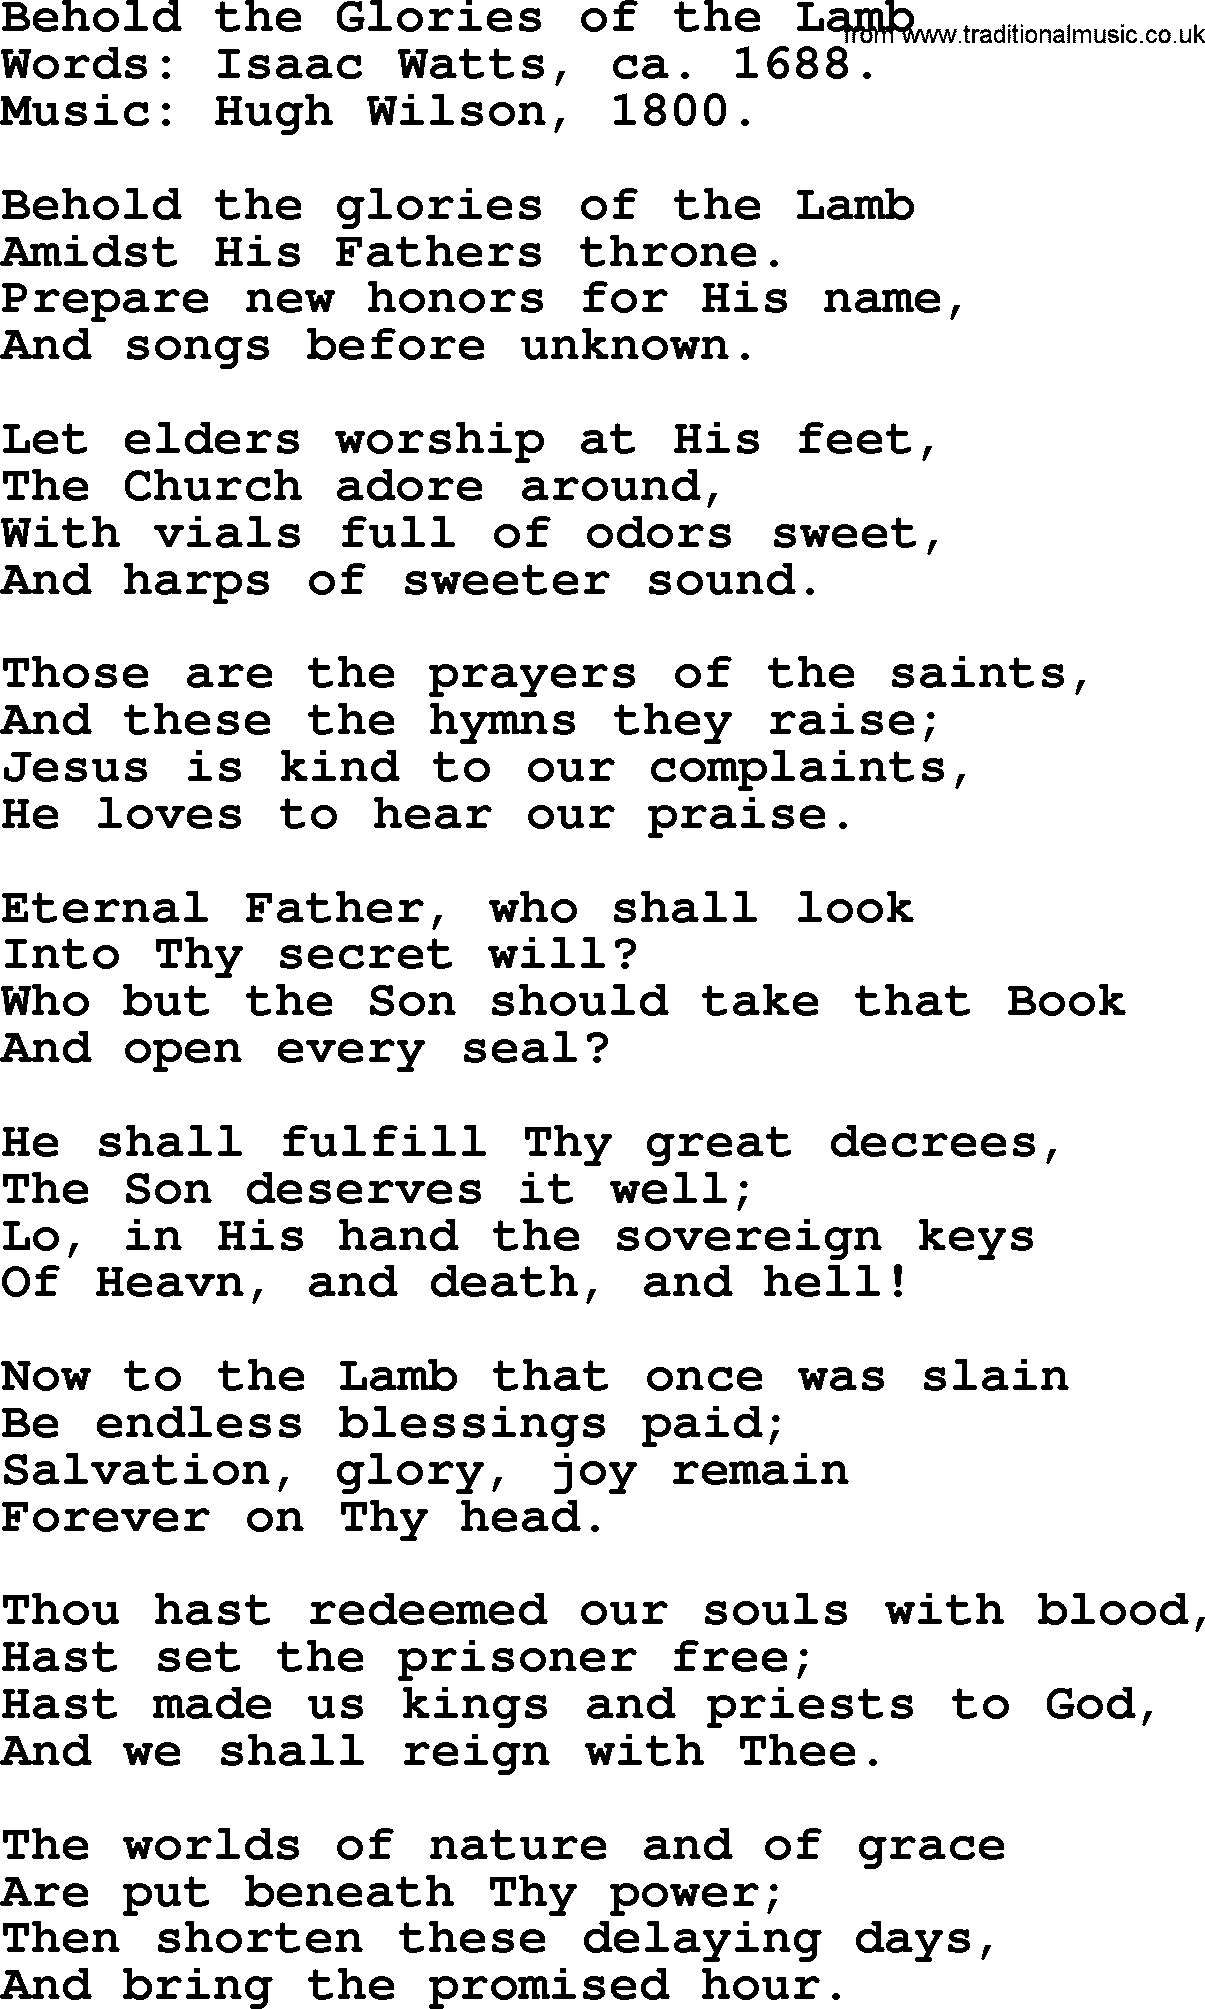 Isaac Watts Christian hymn: Behold the Glories of the Lamb- lyricss